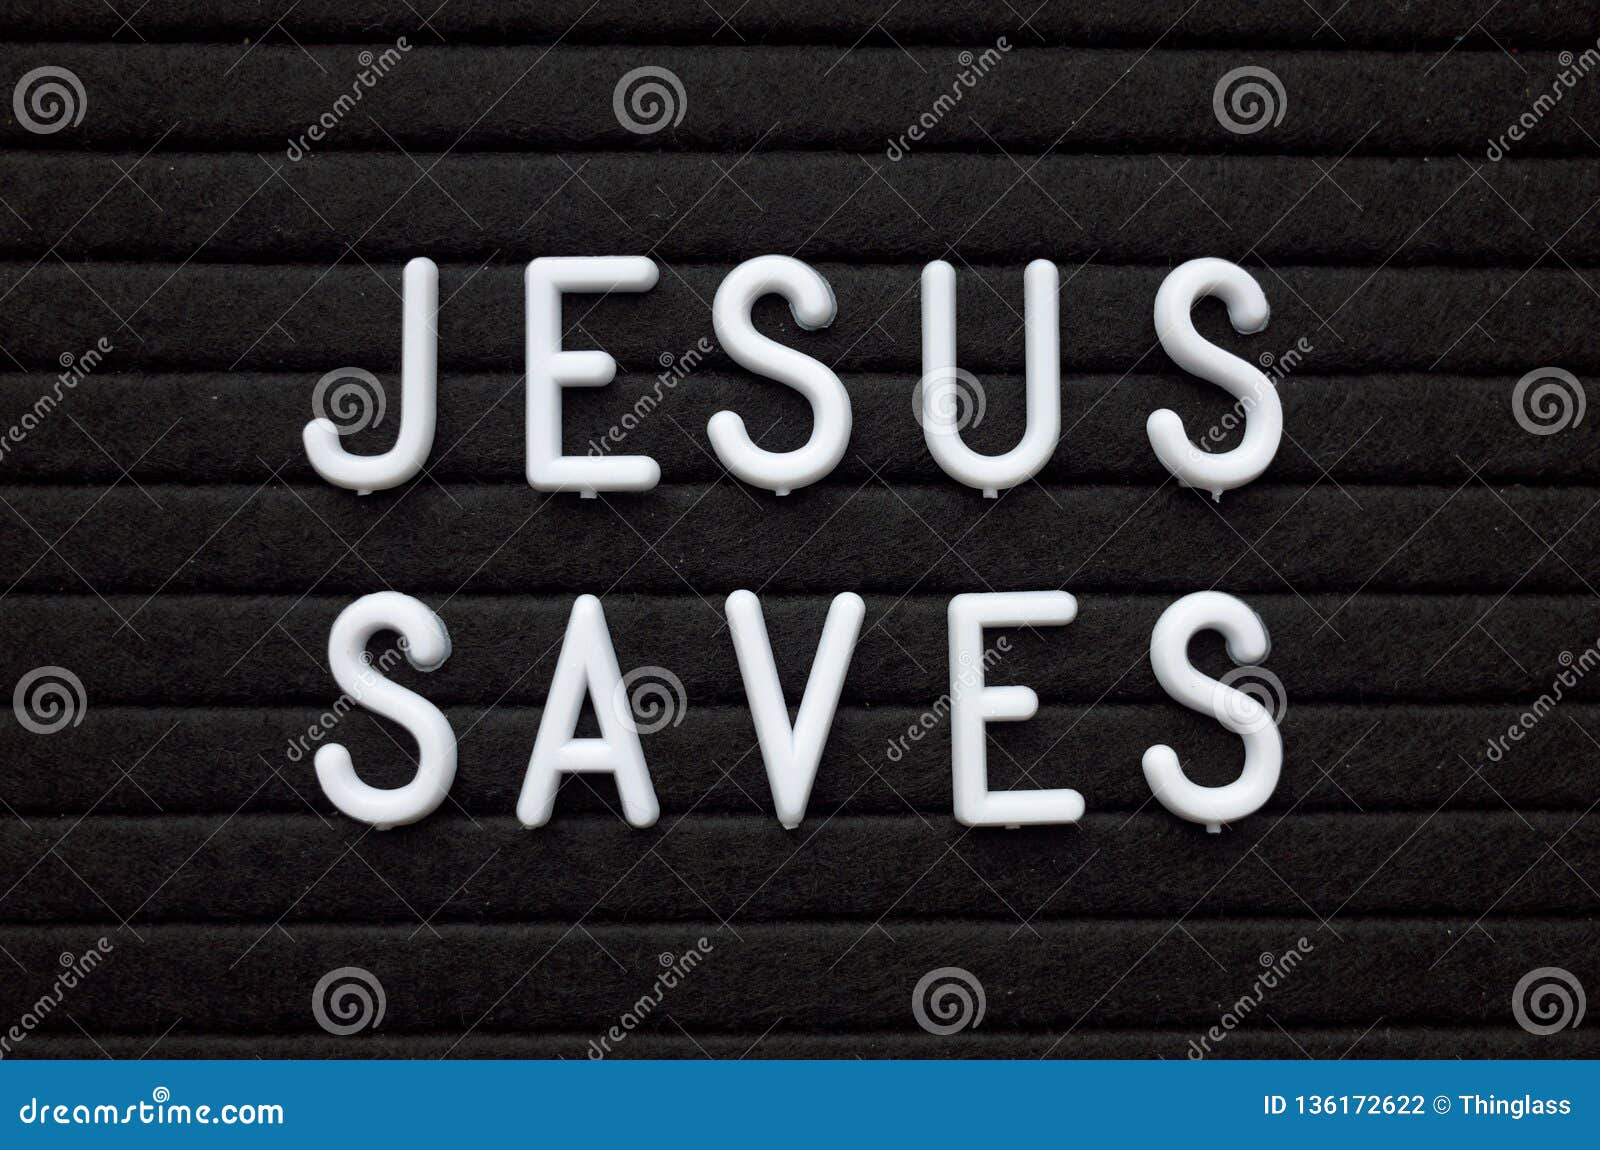 jesus saves reminder on a notice board